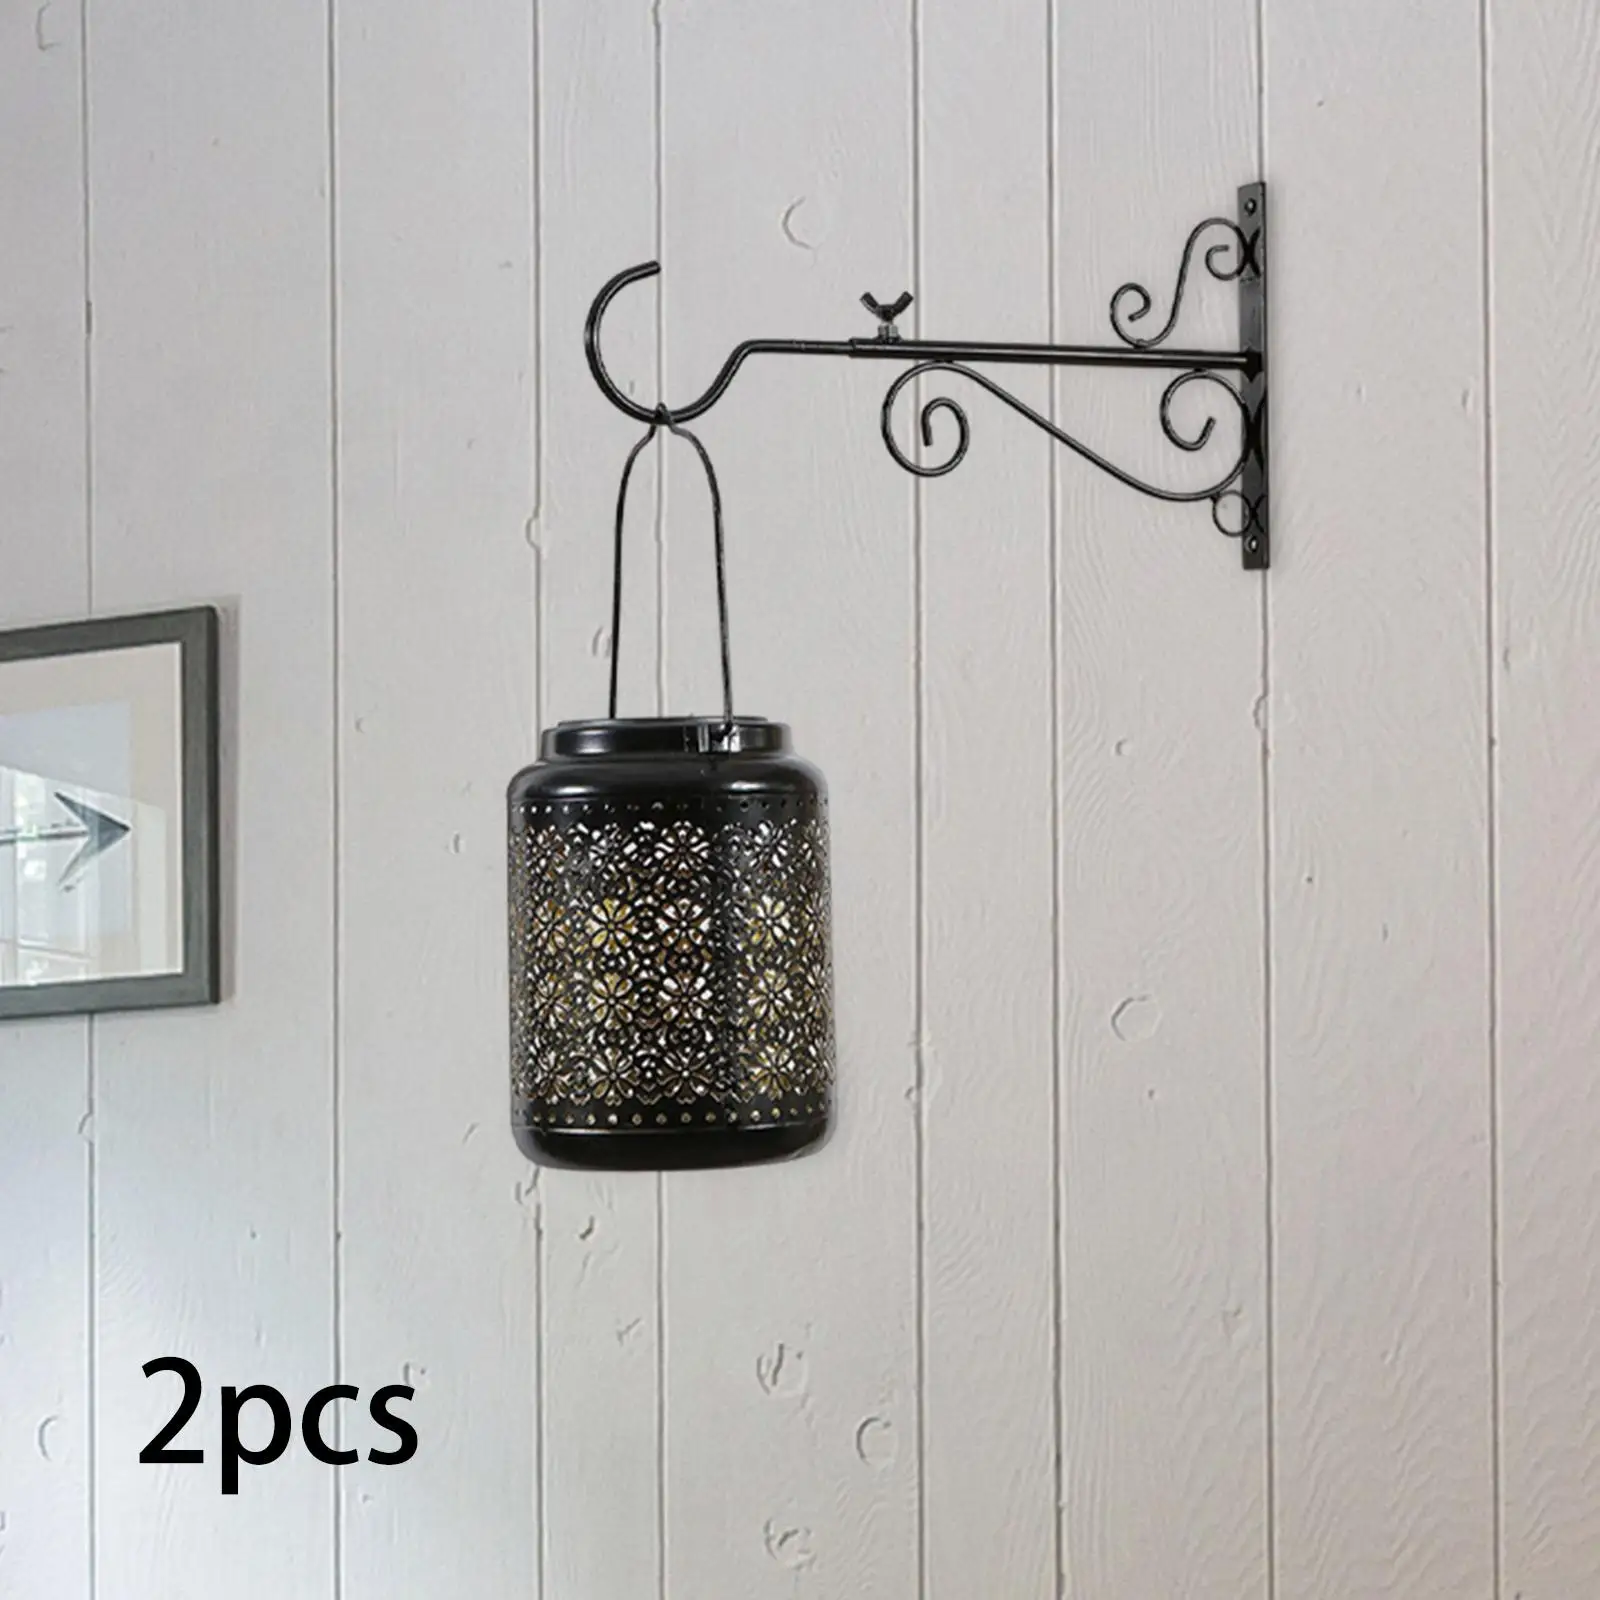 2 Pieces Wall Hanging Basket Bracket for Flower Pot Hanging Bird Feeders